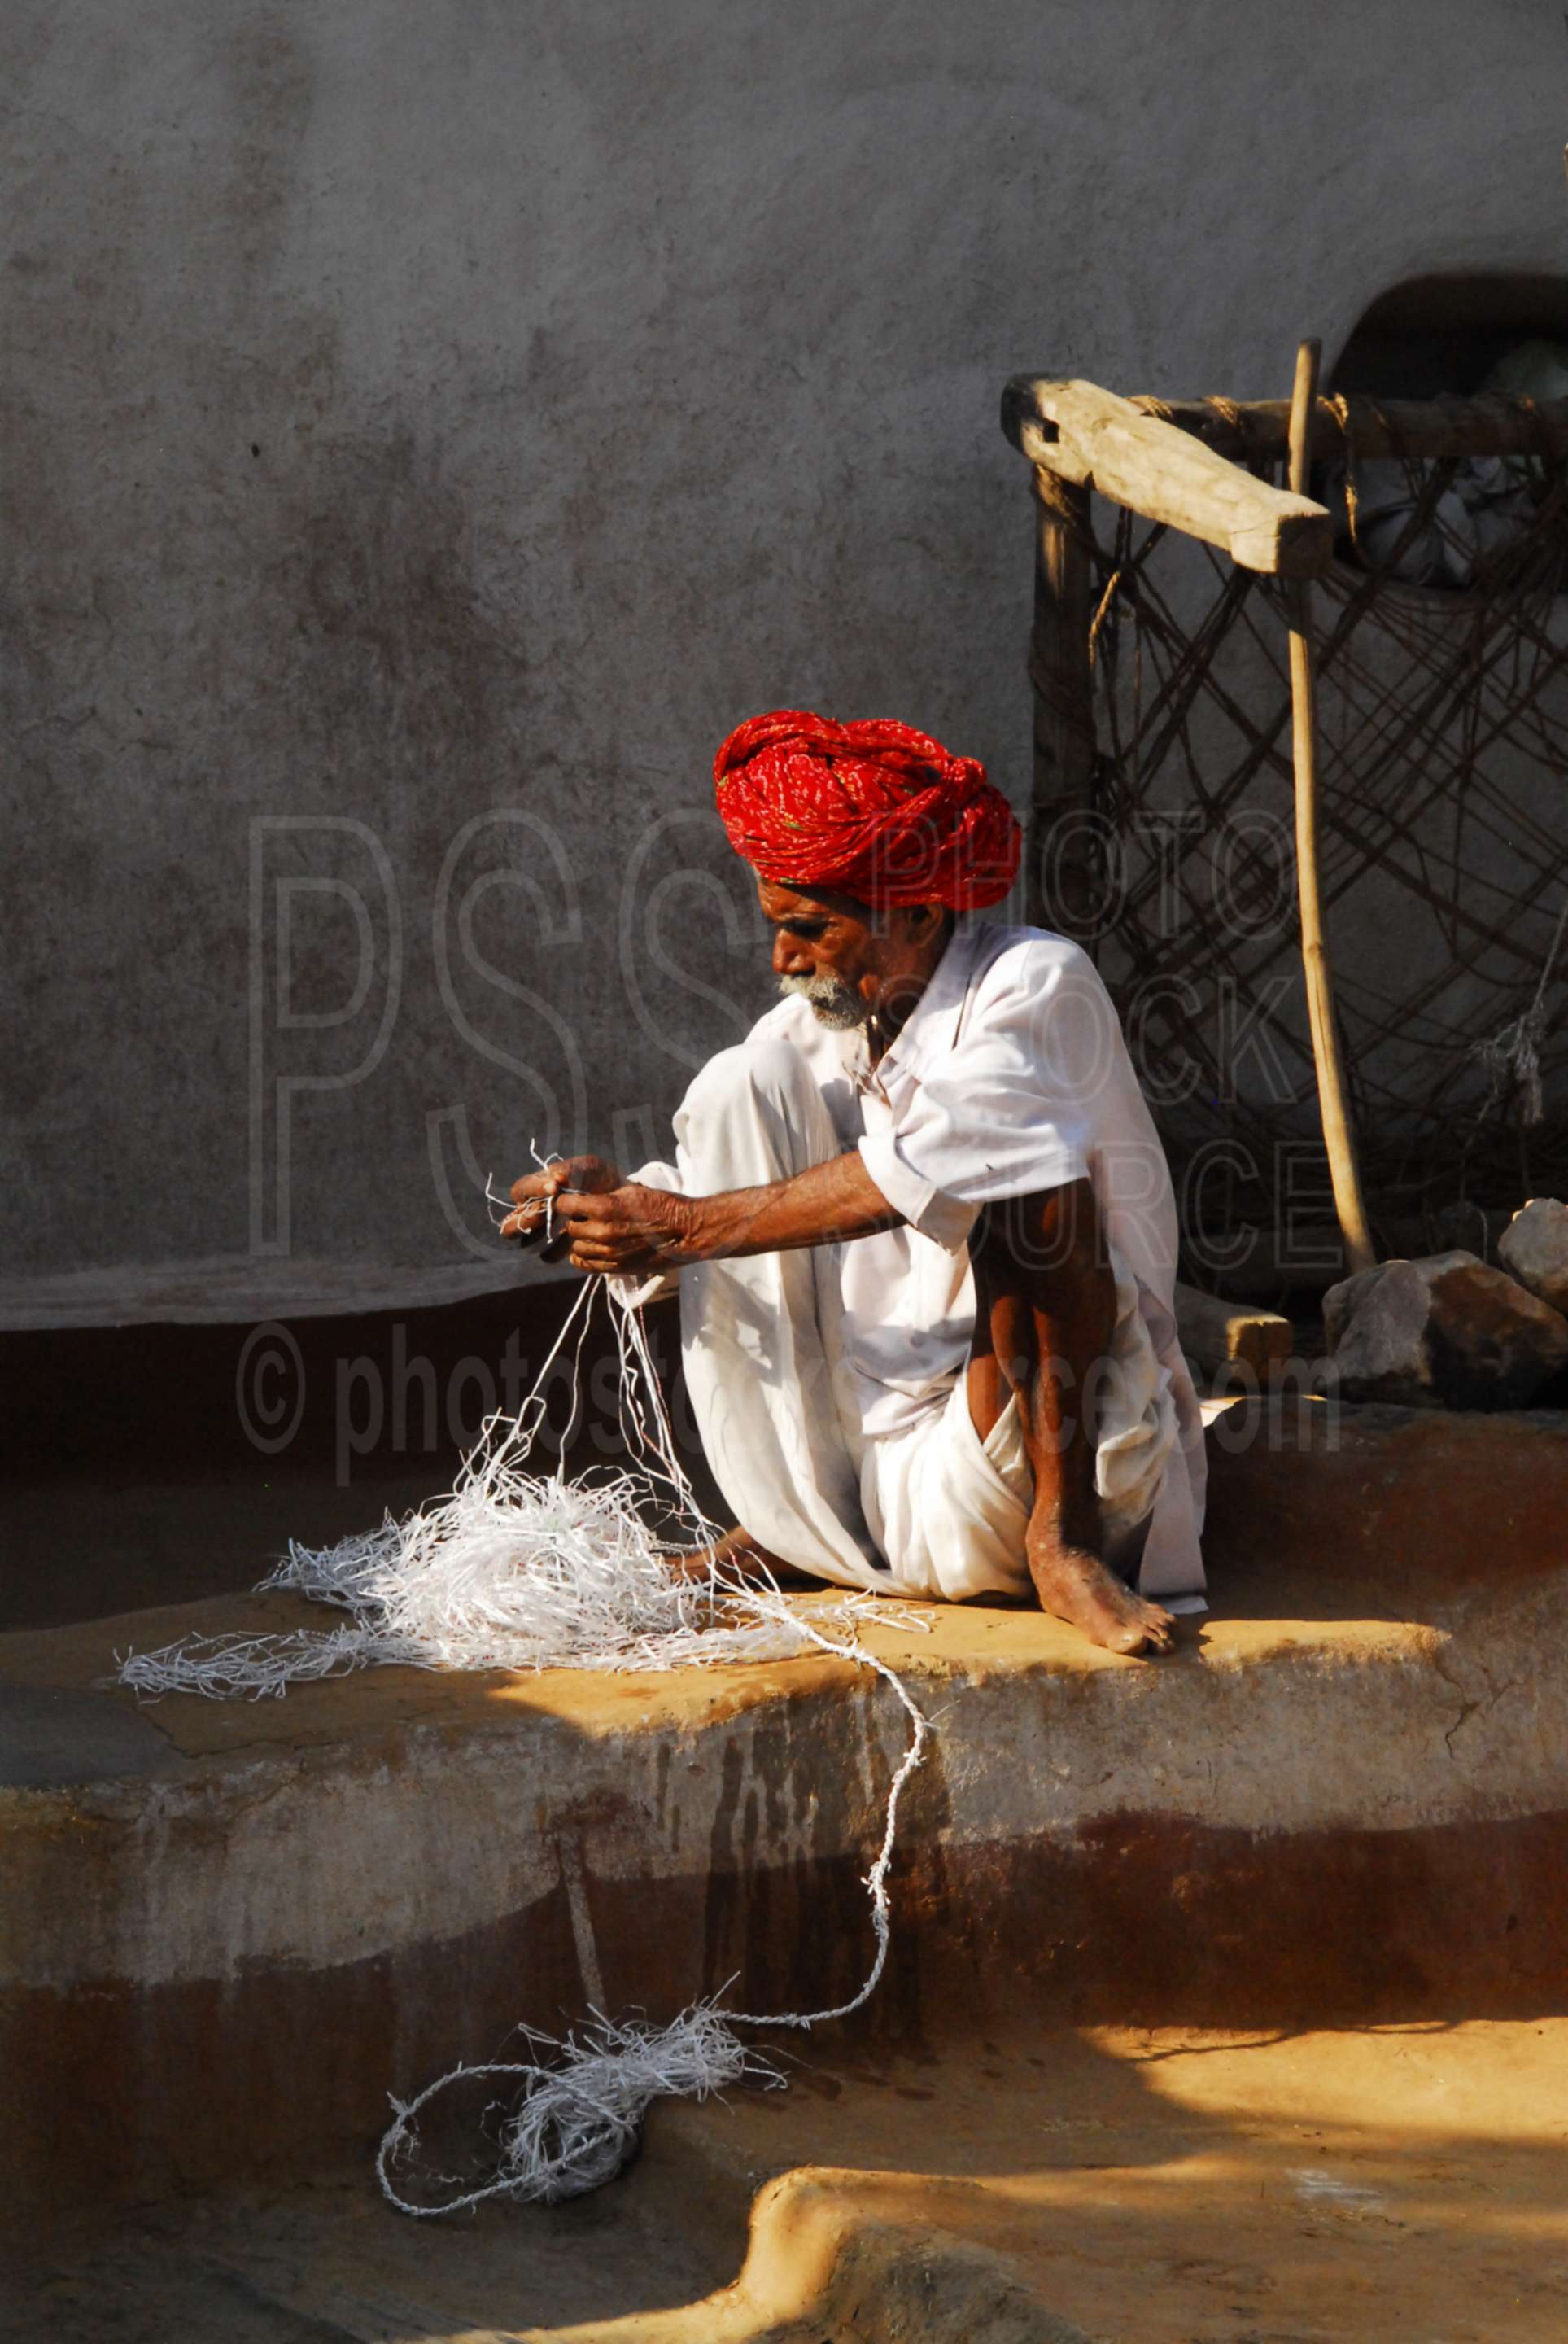 Man in Red Turban,man,turban,red,working,mosque,minaret,string,rope